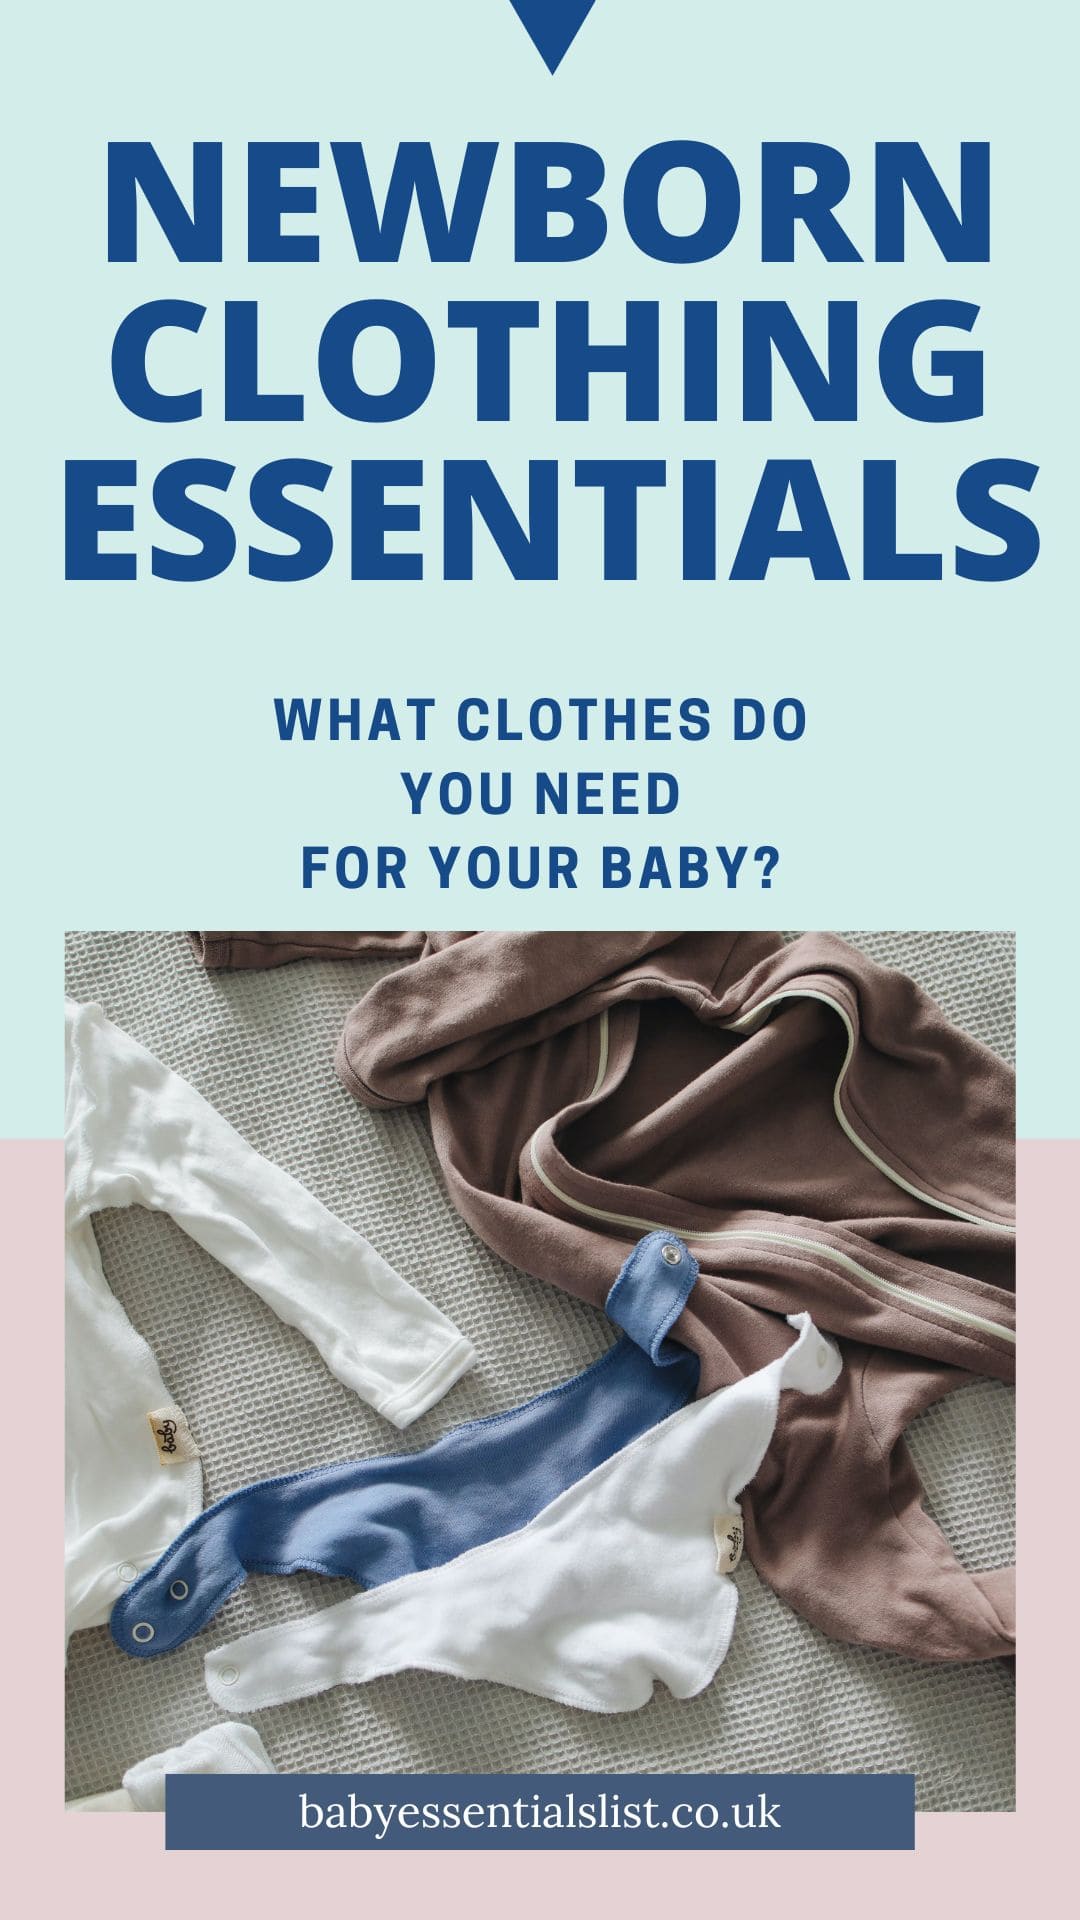 Newborn clothing essentials